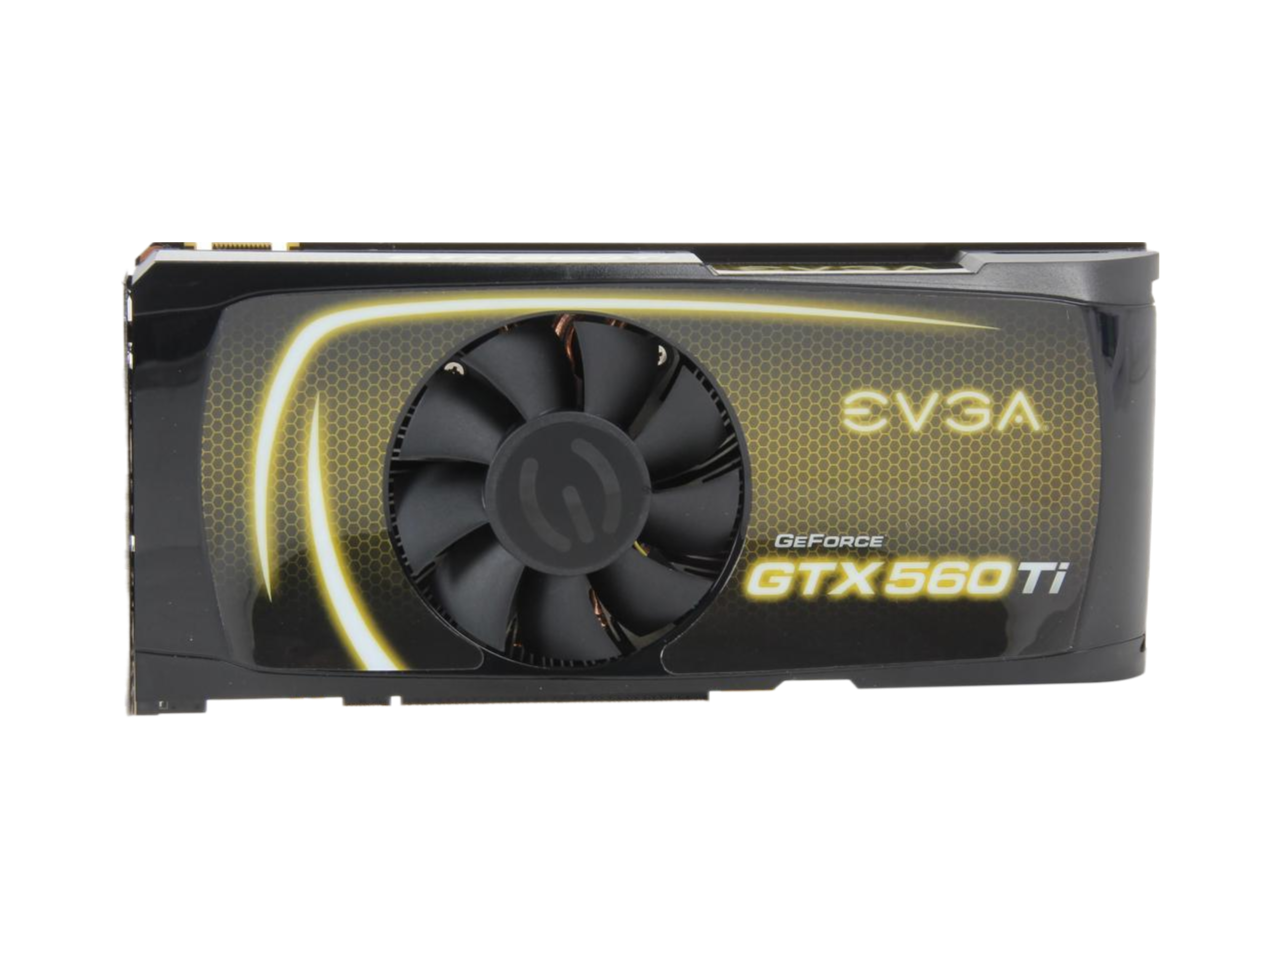 EVGA SuperClocked GeForce GTX 560 Ti (Fermi) 1GB 256-bit GDDR5 PCI Express 2.0 x16 HDCP Ready SLI Support Video Card 01G-P3-1563-AR